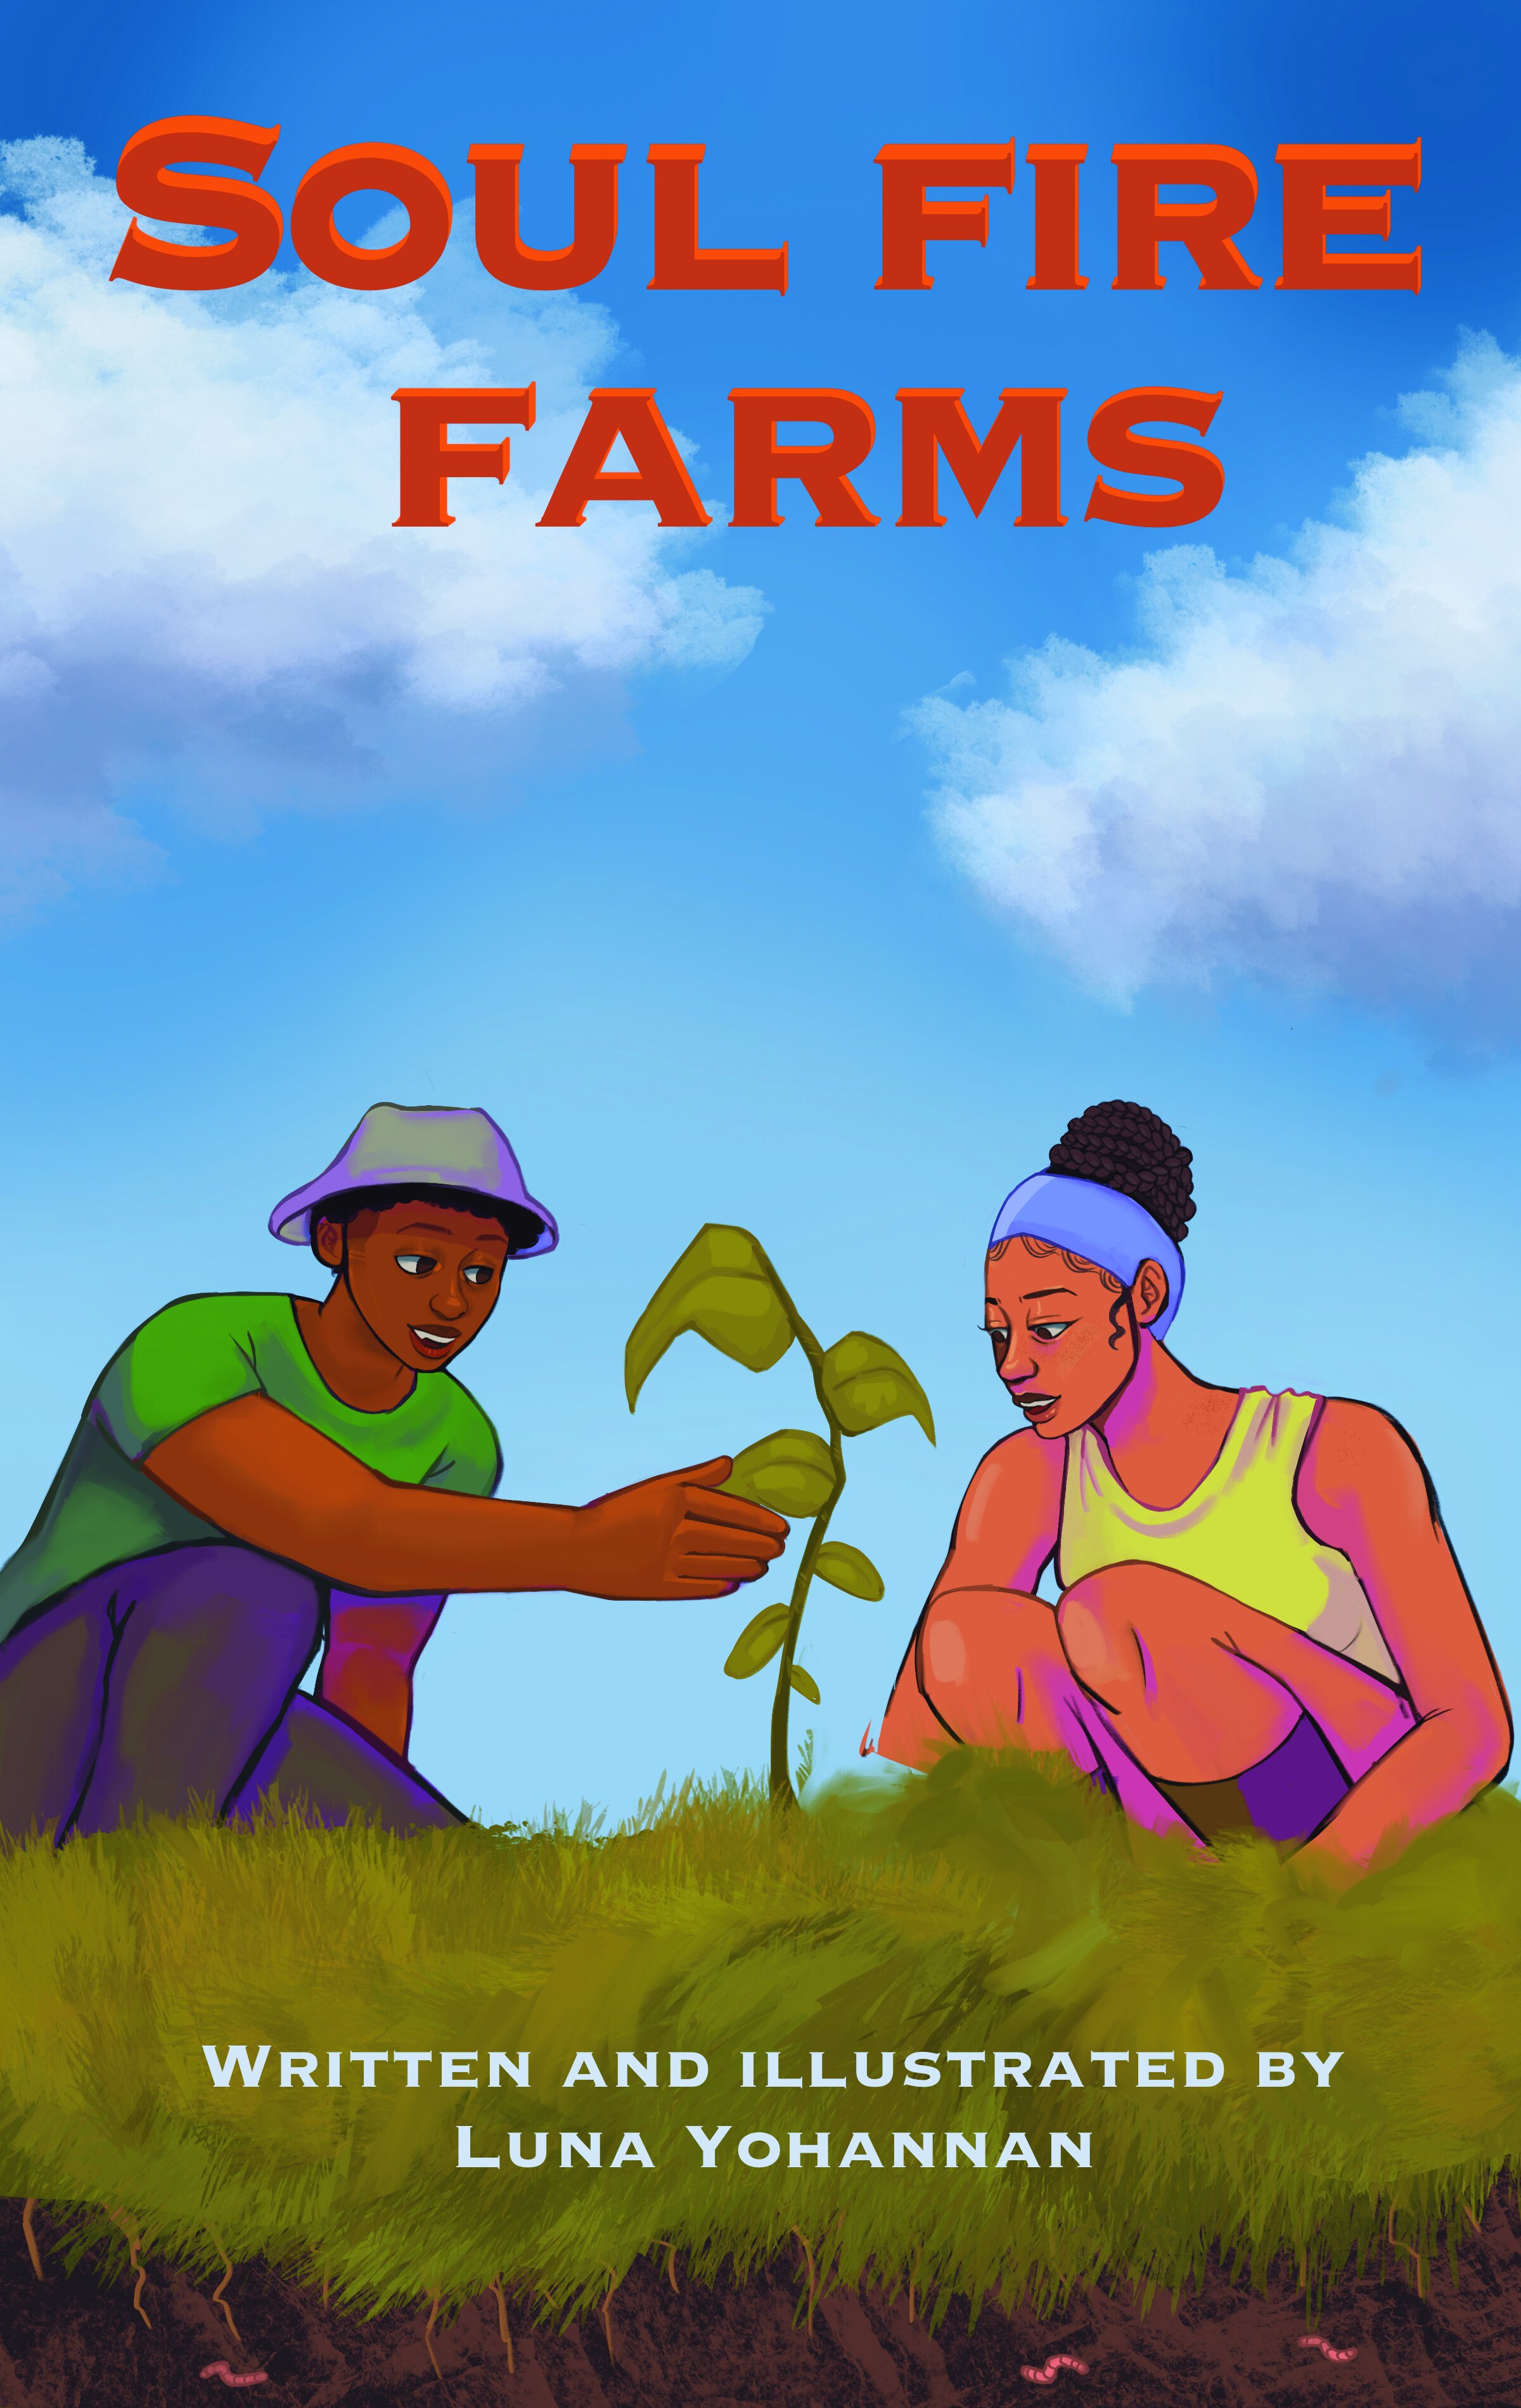   Soul Fire Farms (2021).  Art from former TPC member. 